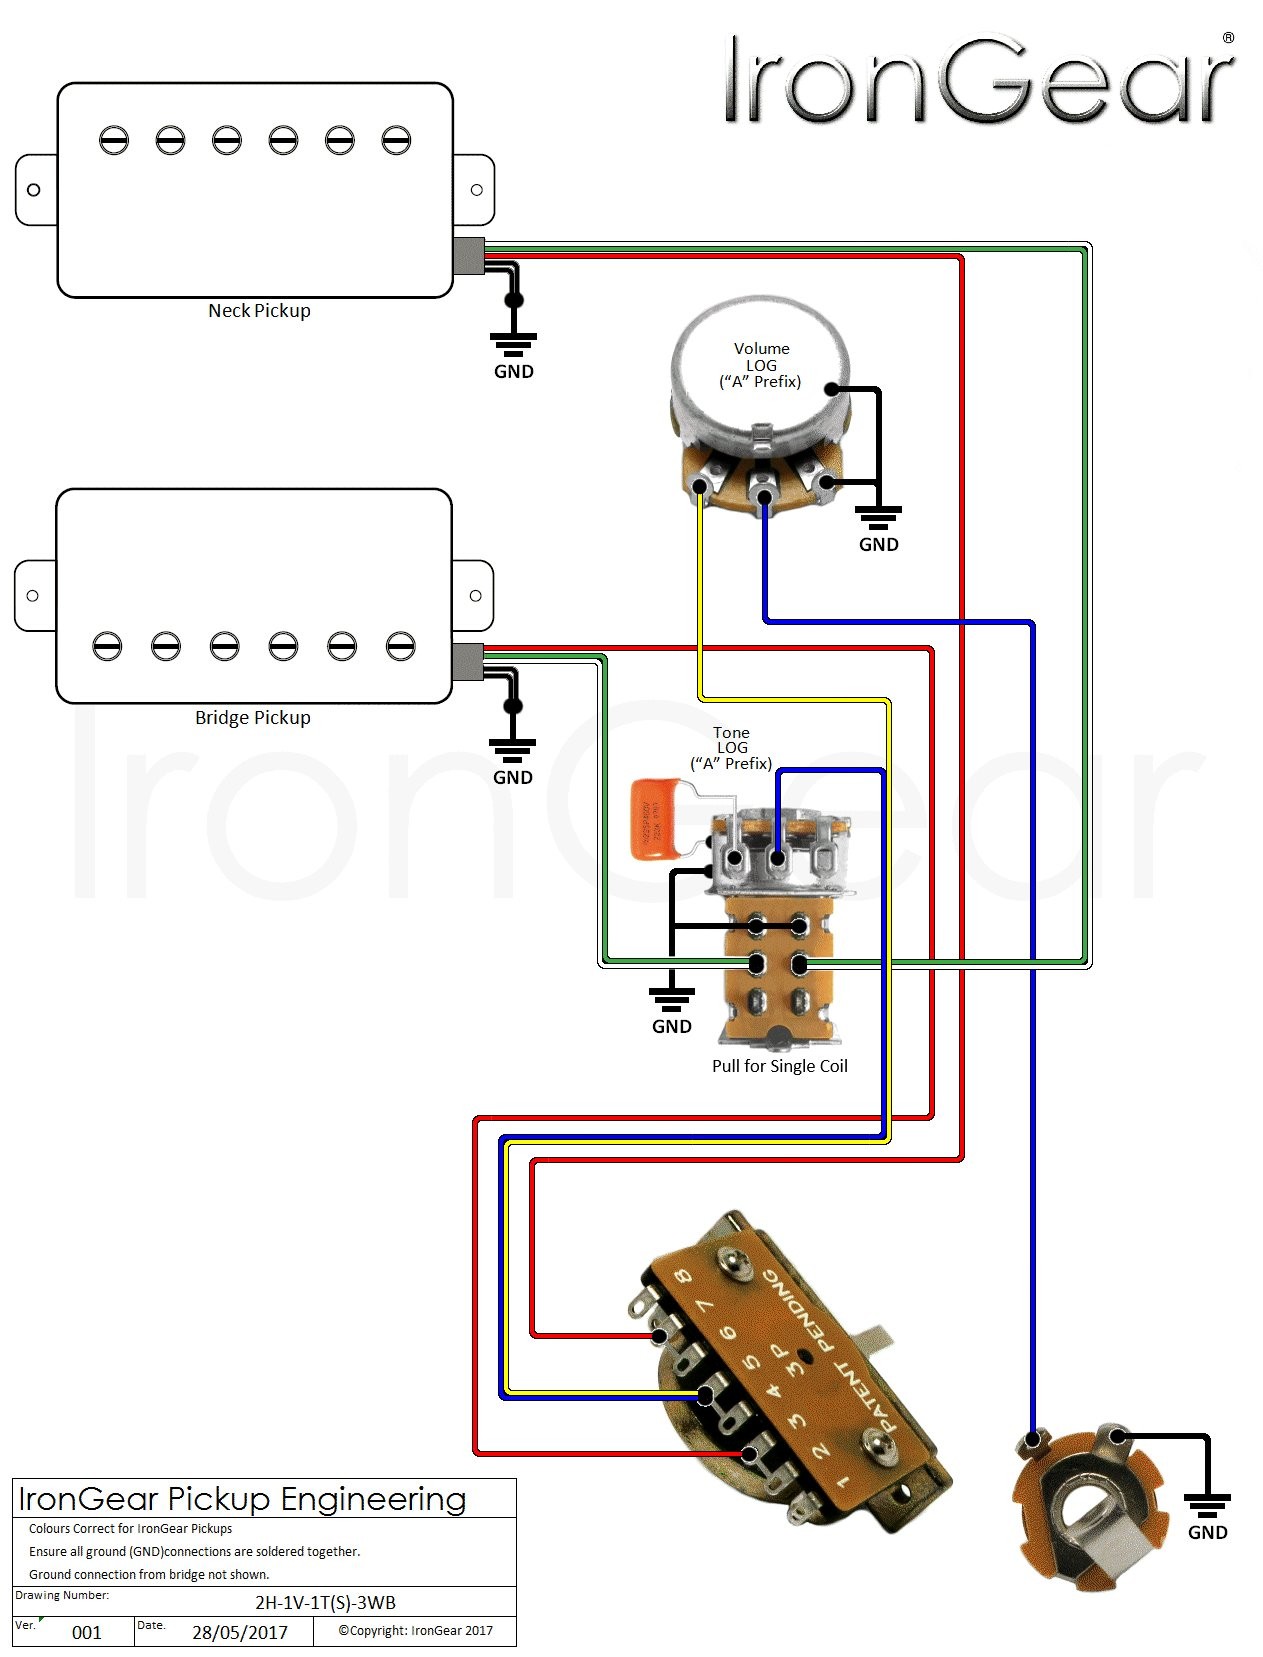 Emg Hz Wiring Diagram Awesome Three Humbucker Wiring Diagram Copy Irongear Pickups Wiring Emg Hz